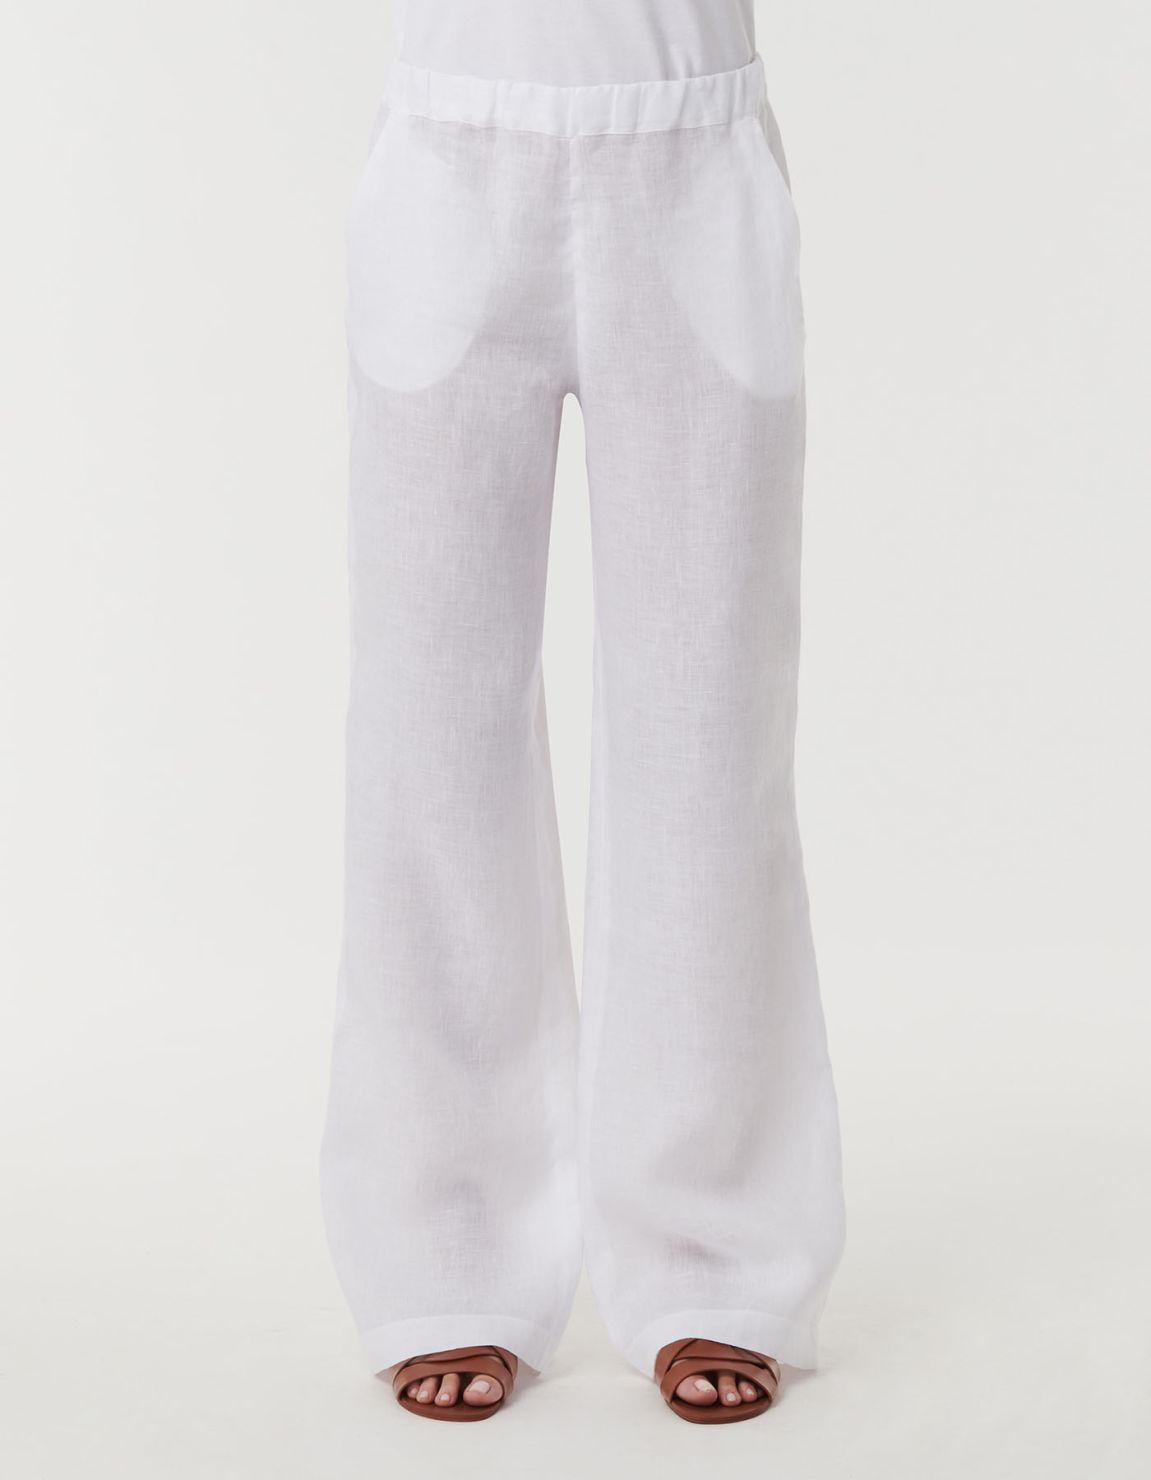 Pants White Linen Solid colour One Size 2